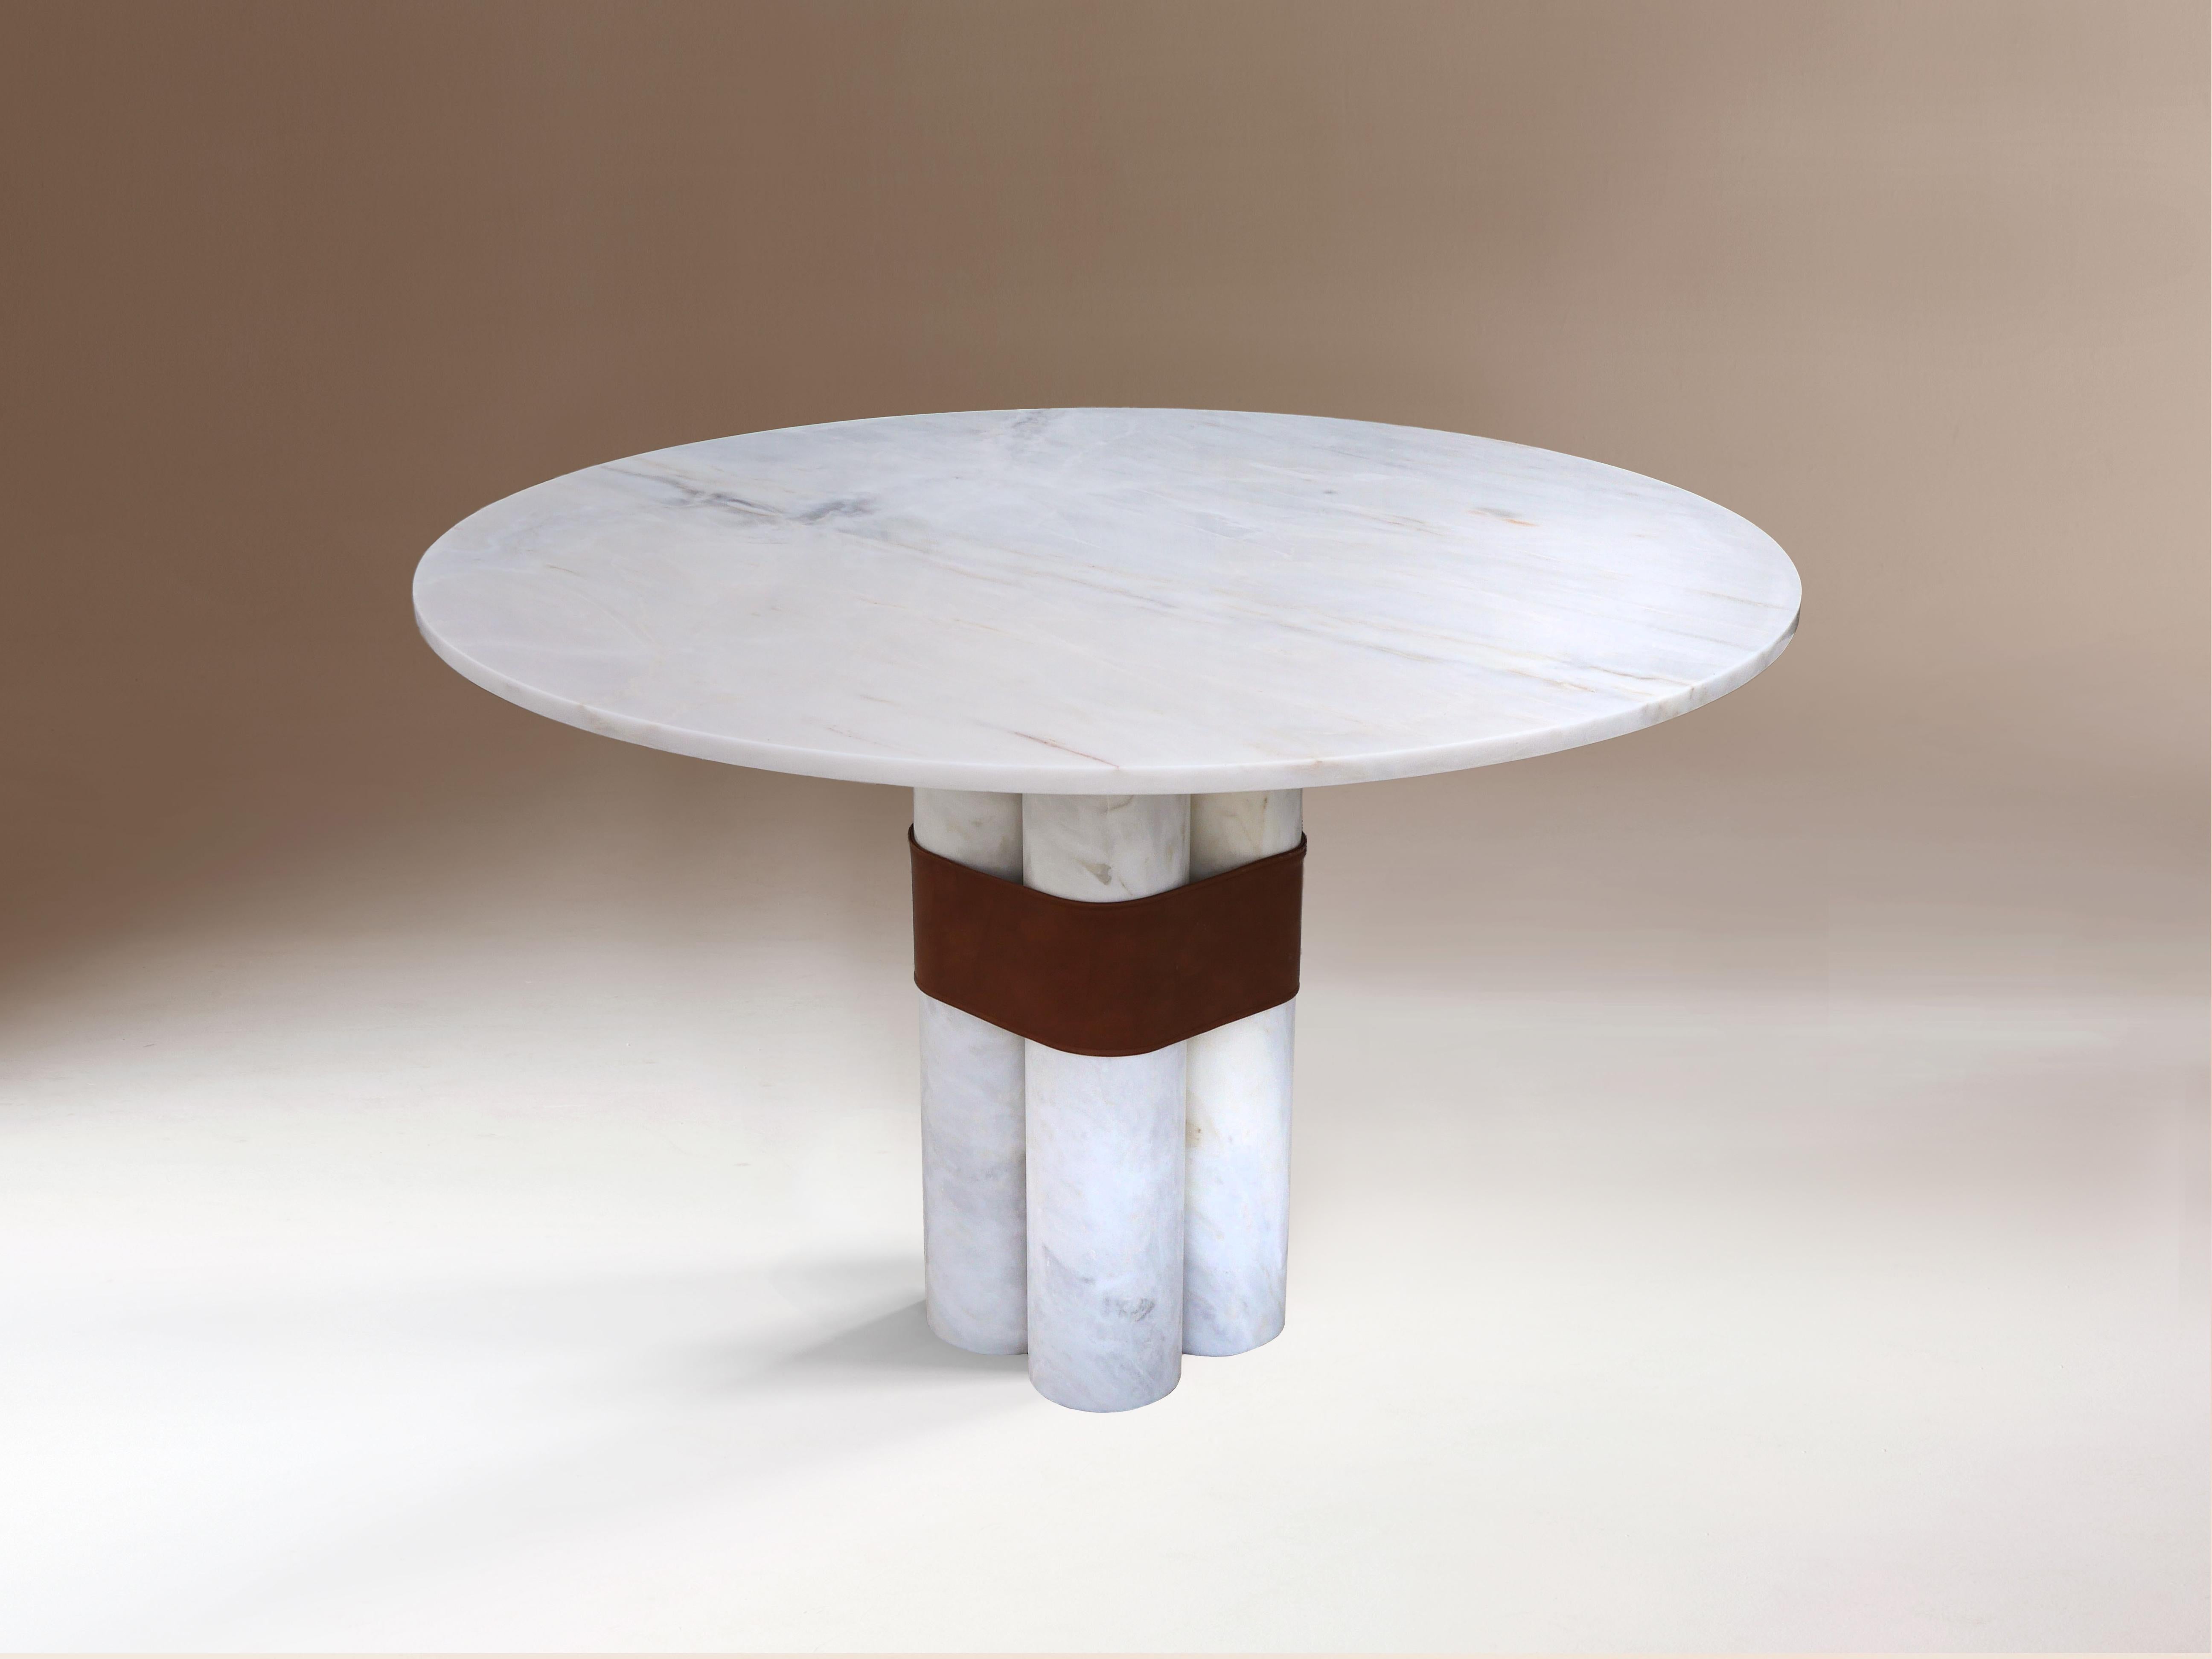 Axis Side Table by Dovain Studio
Dimensions: H 60 x Ø 60 cm
Materials: Estremoz White Marble, Eco leather

Dovain Studio
Creative direction by Sergio Prieto, a Spanish artist-designer who was born in Talavera de la Reina in 1994. He dedicated